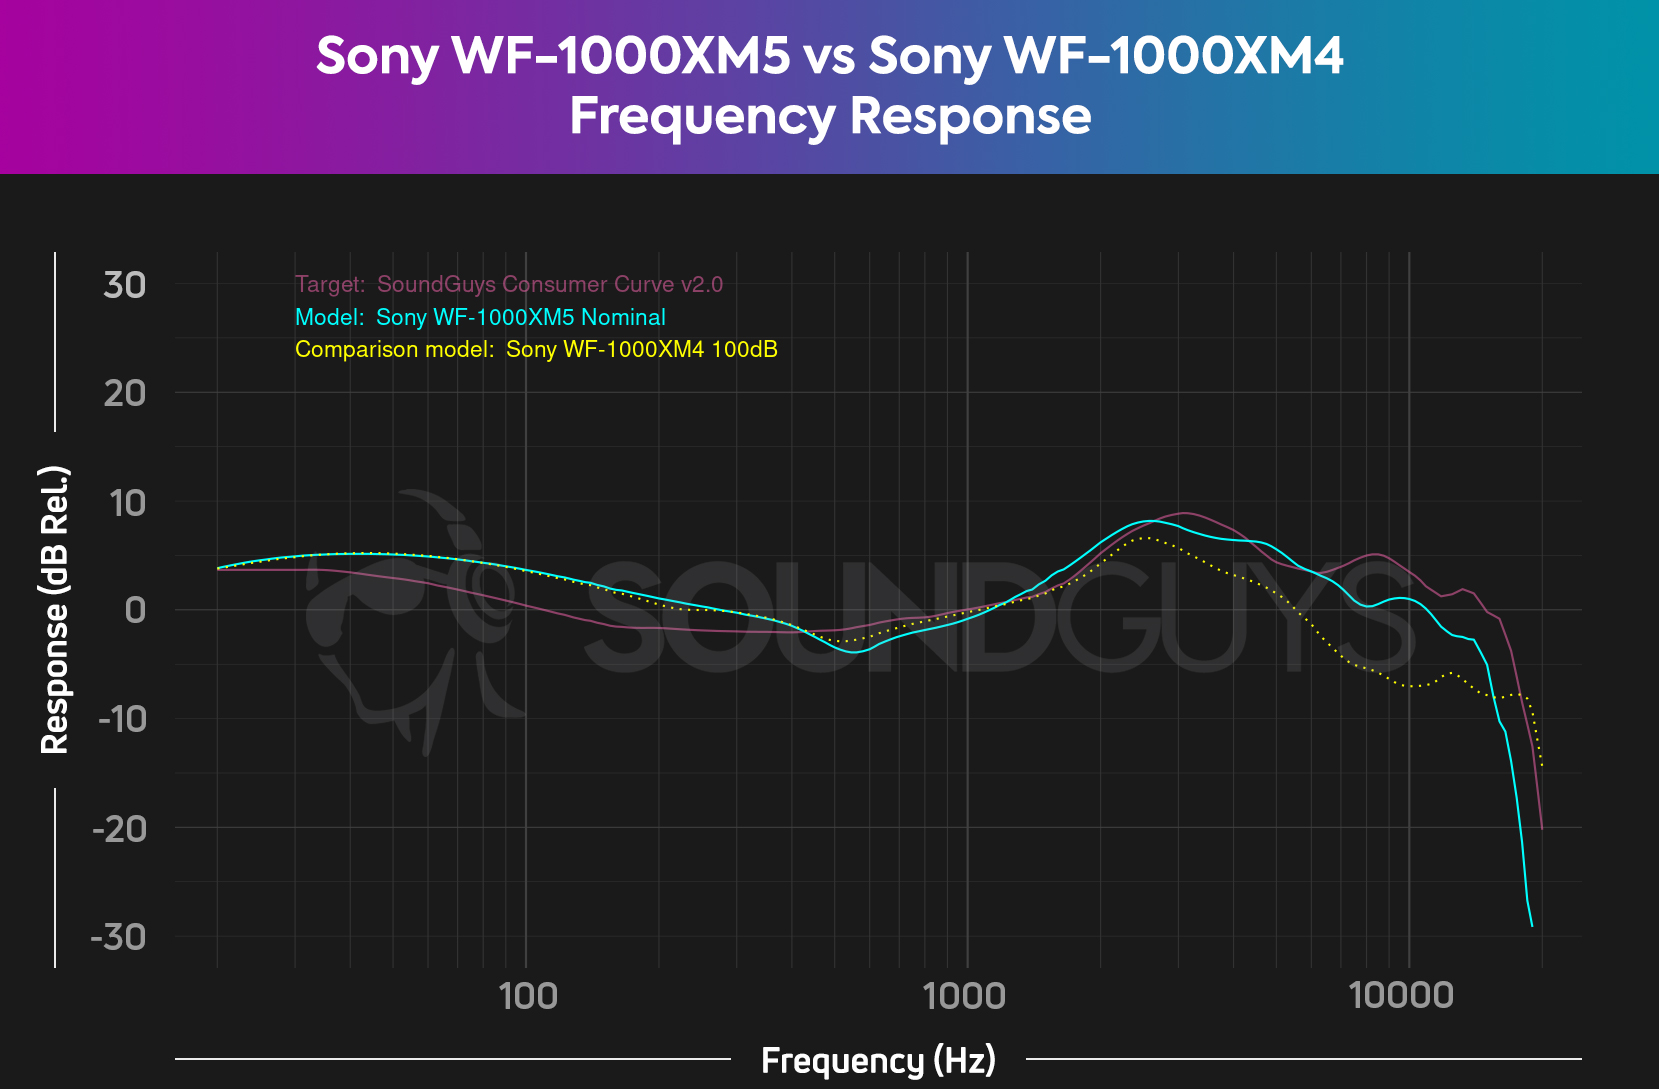 Sony WF 1000XM5 vs Sony WF 1000XM4 comparison frequency response chart